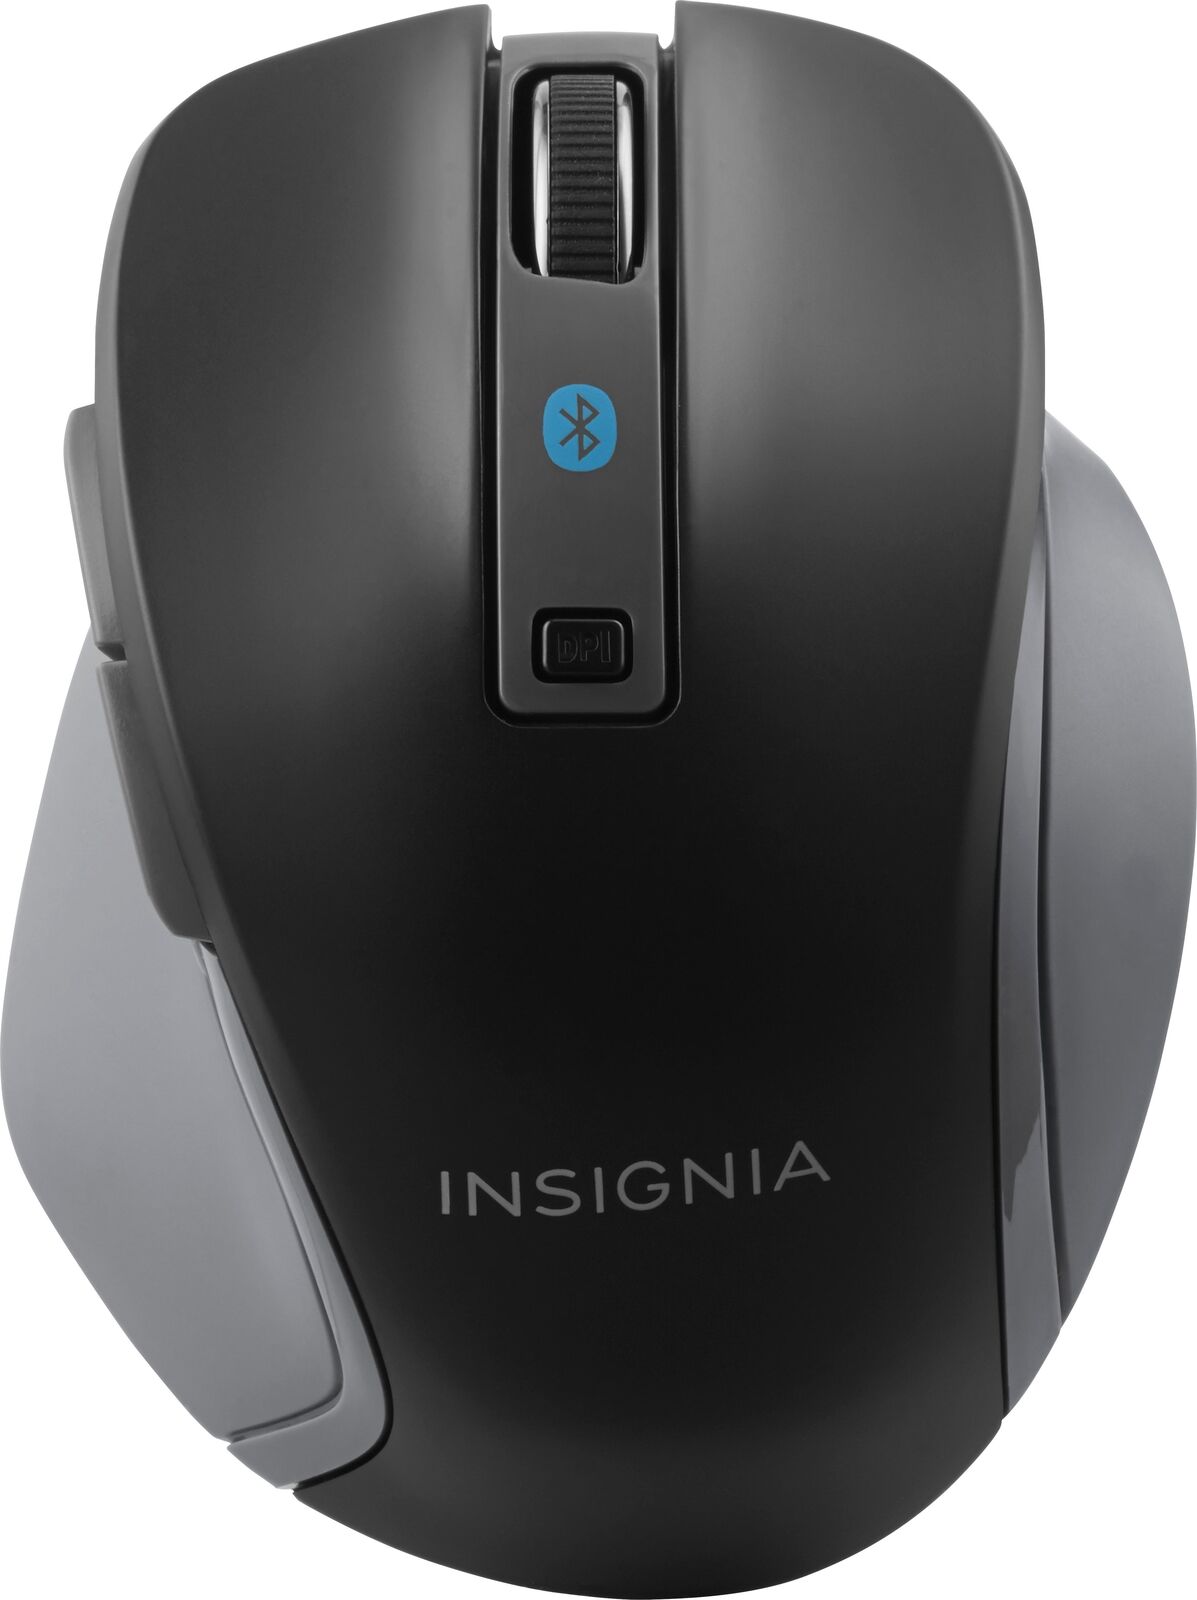 Insignia- Bluetooth Mouse - Black